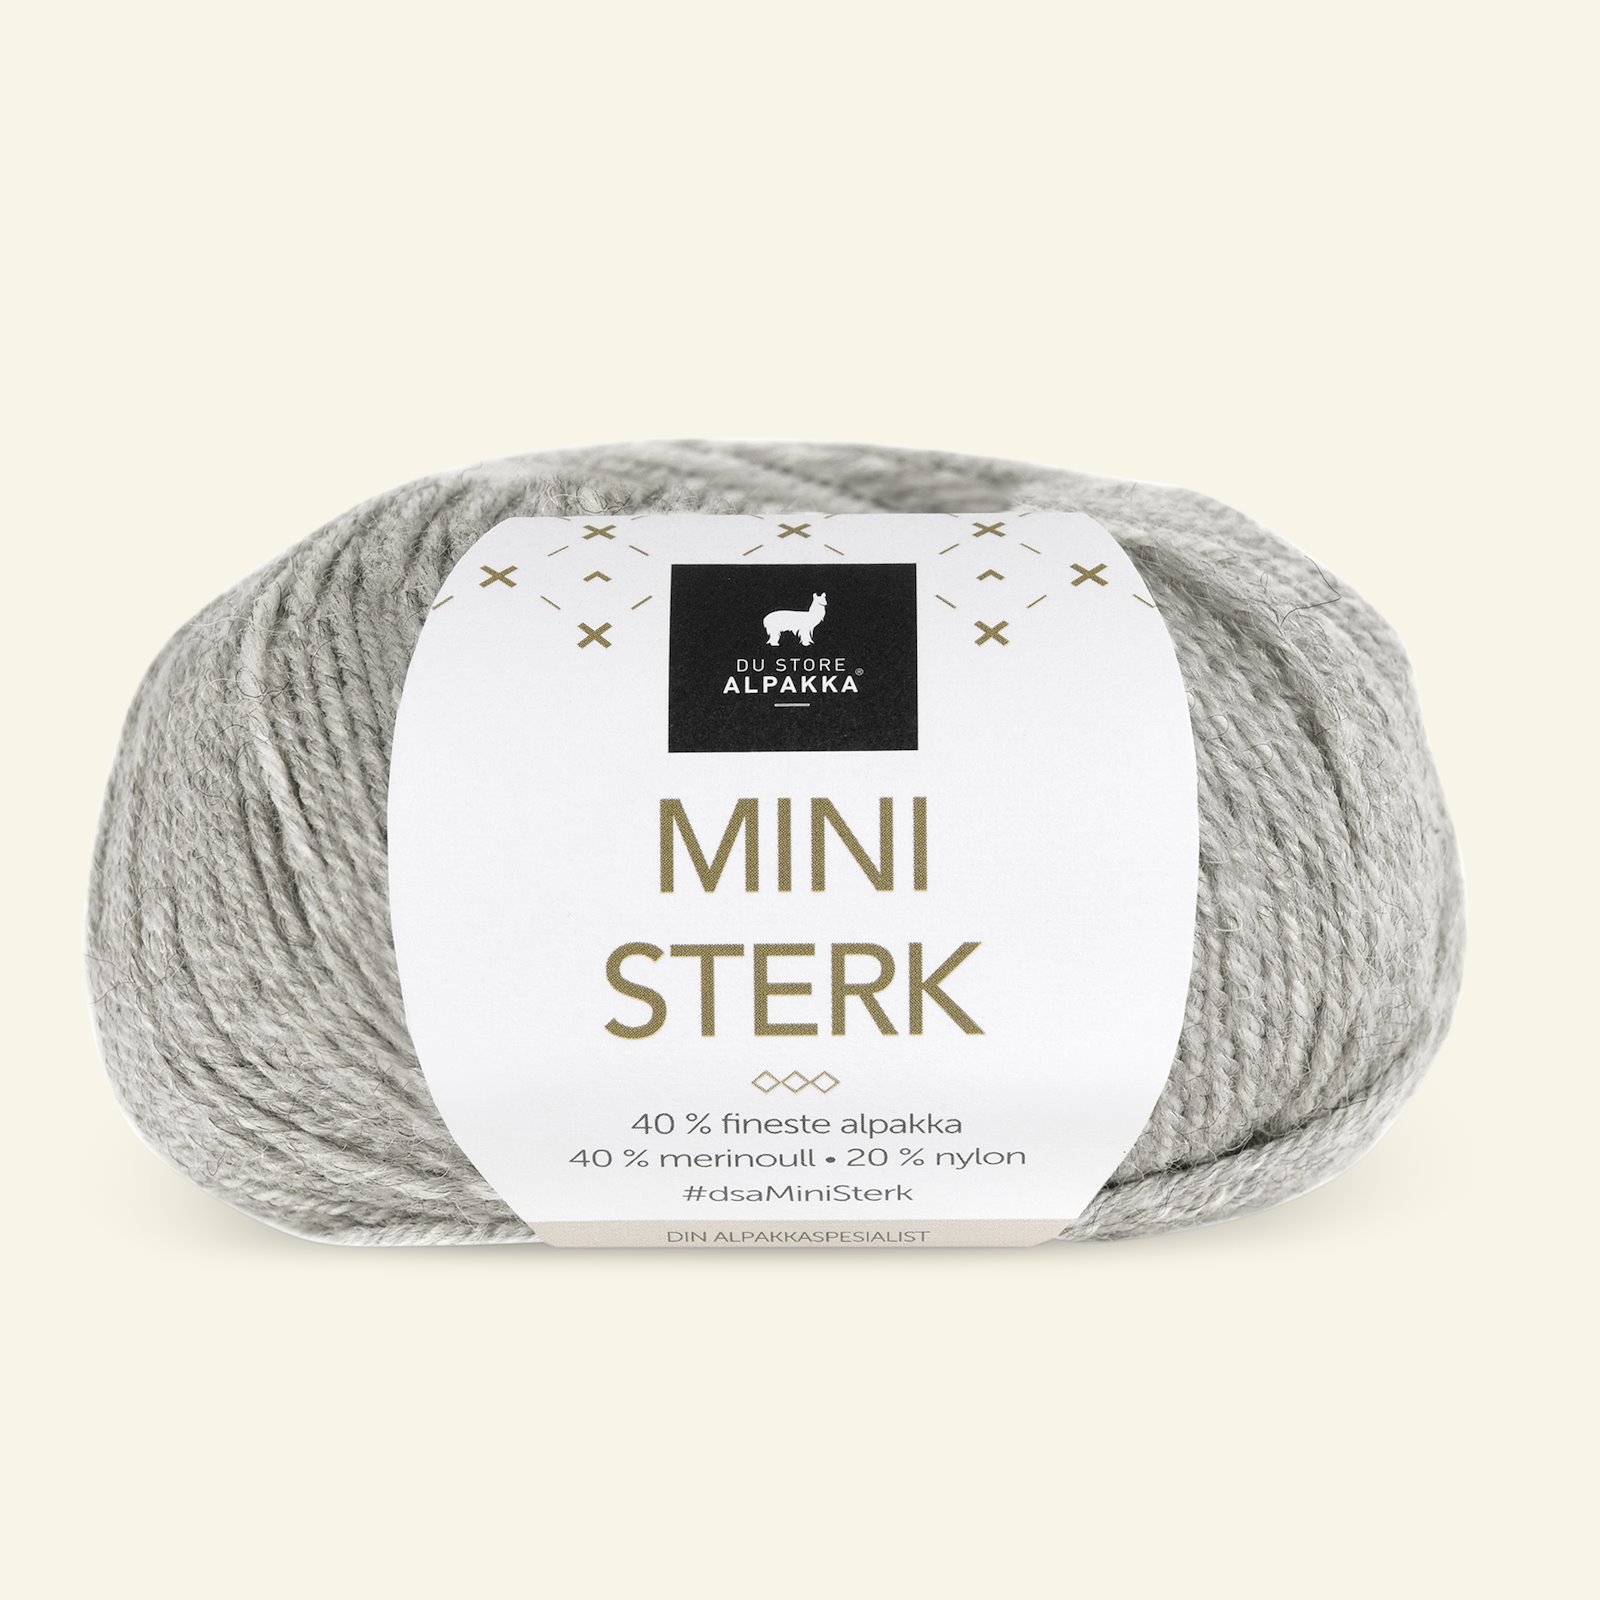 Du Store Alpakka,alpaca merino mixed yarn "Mini Sterk", lt grey mel. (841) 90000632_pack